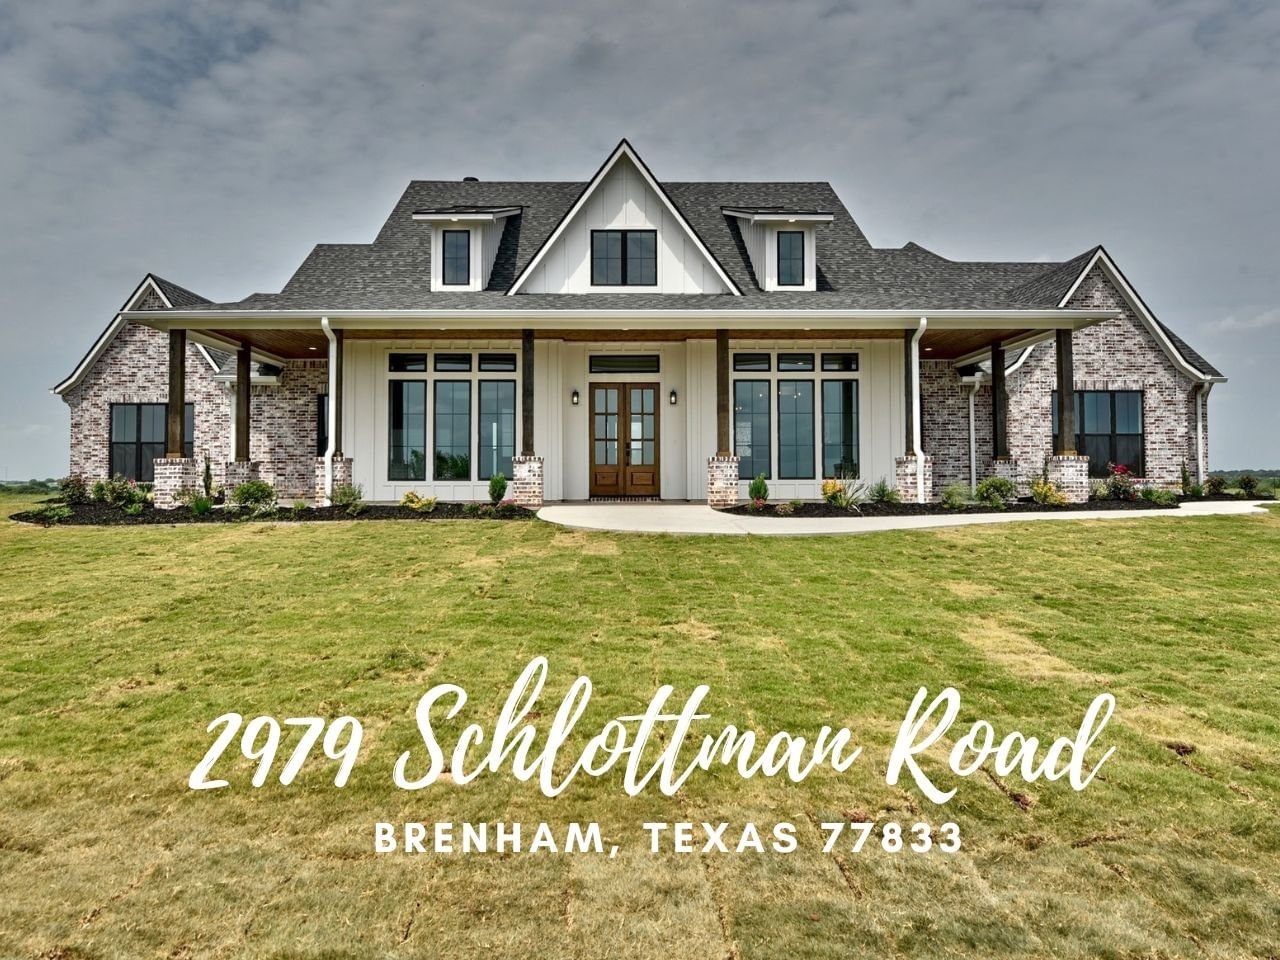 Real estate property located at 2979 Schlottman Road, Washington, n/a, Brenham, TX, US